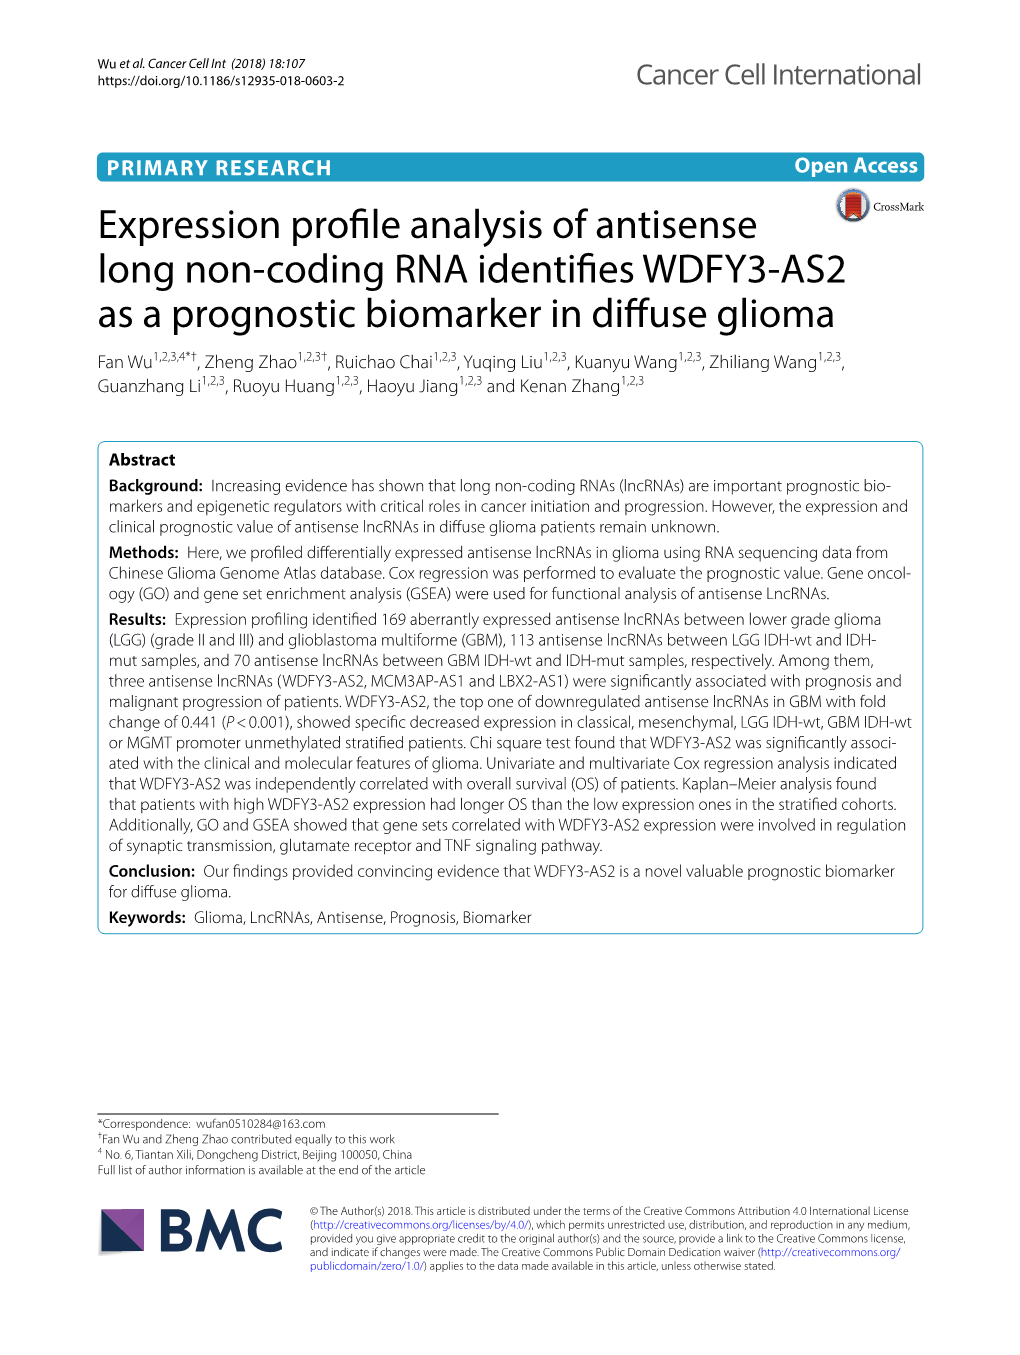 Expression Profile Analysis of Antisense Long Non-Coding RNA Identifies WDFY3-AS2 As a Prognostic Biomarker in Diffuse Glioma